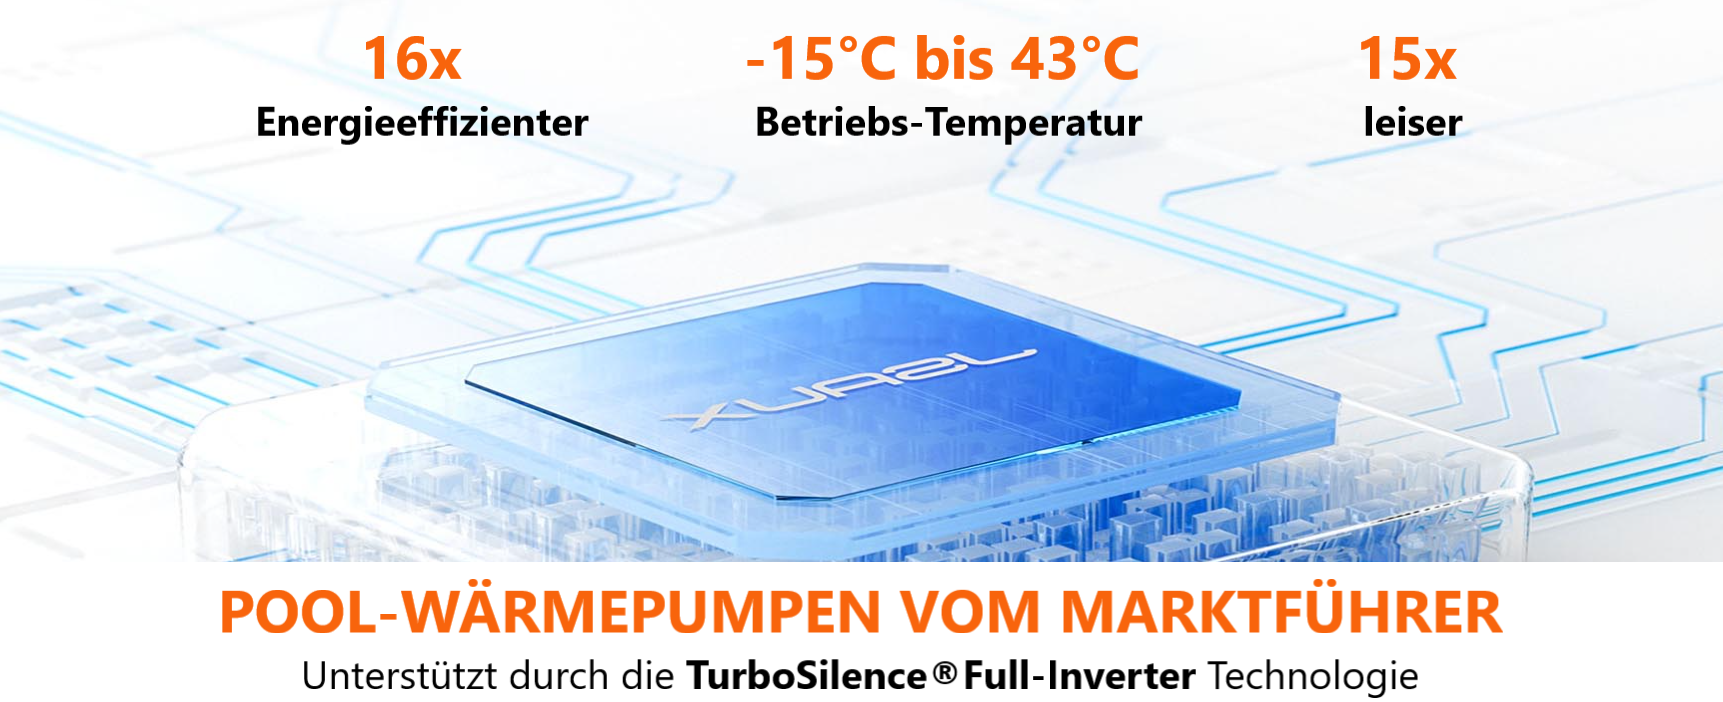 pool wärmepumpe vom marktführer pogalux aquax turbo silence technologie schweiz